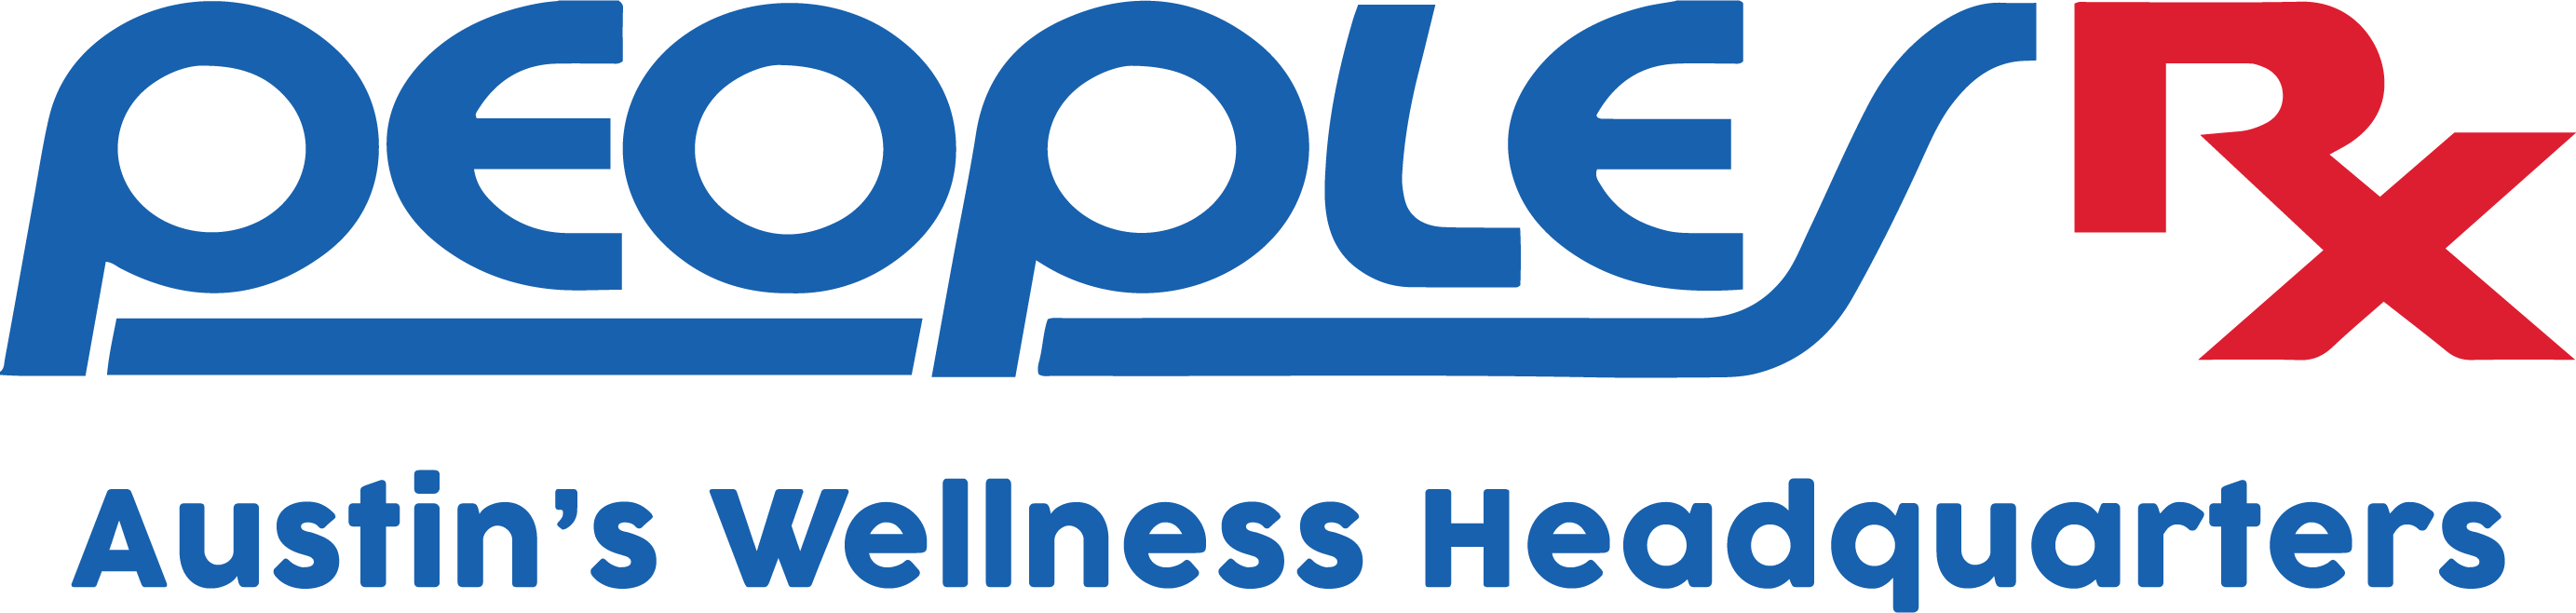 Peoples Rx Pharmacy – Austin’s Wellness Headquarters